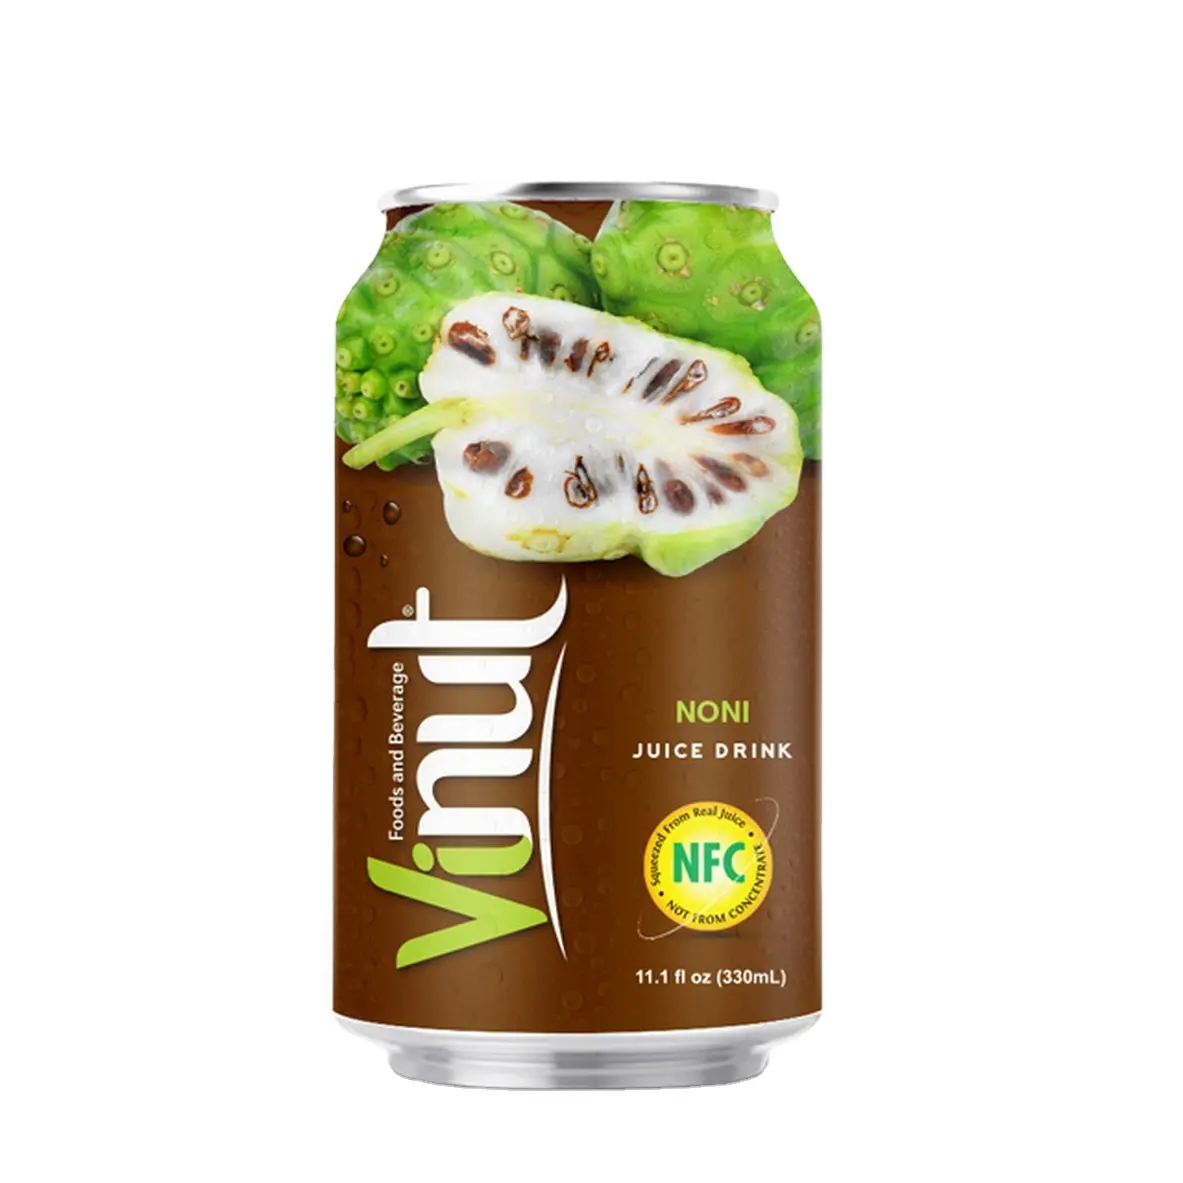 Vinut distribuidores de suco noni 330ml, oem, bebidas, premium saudável